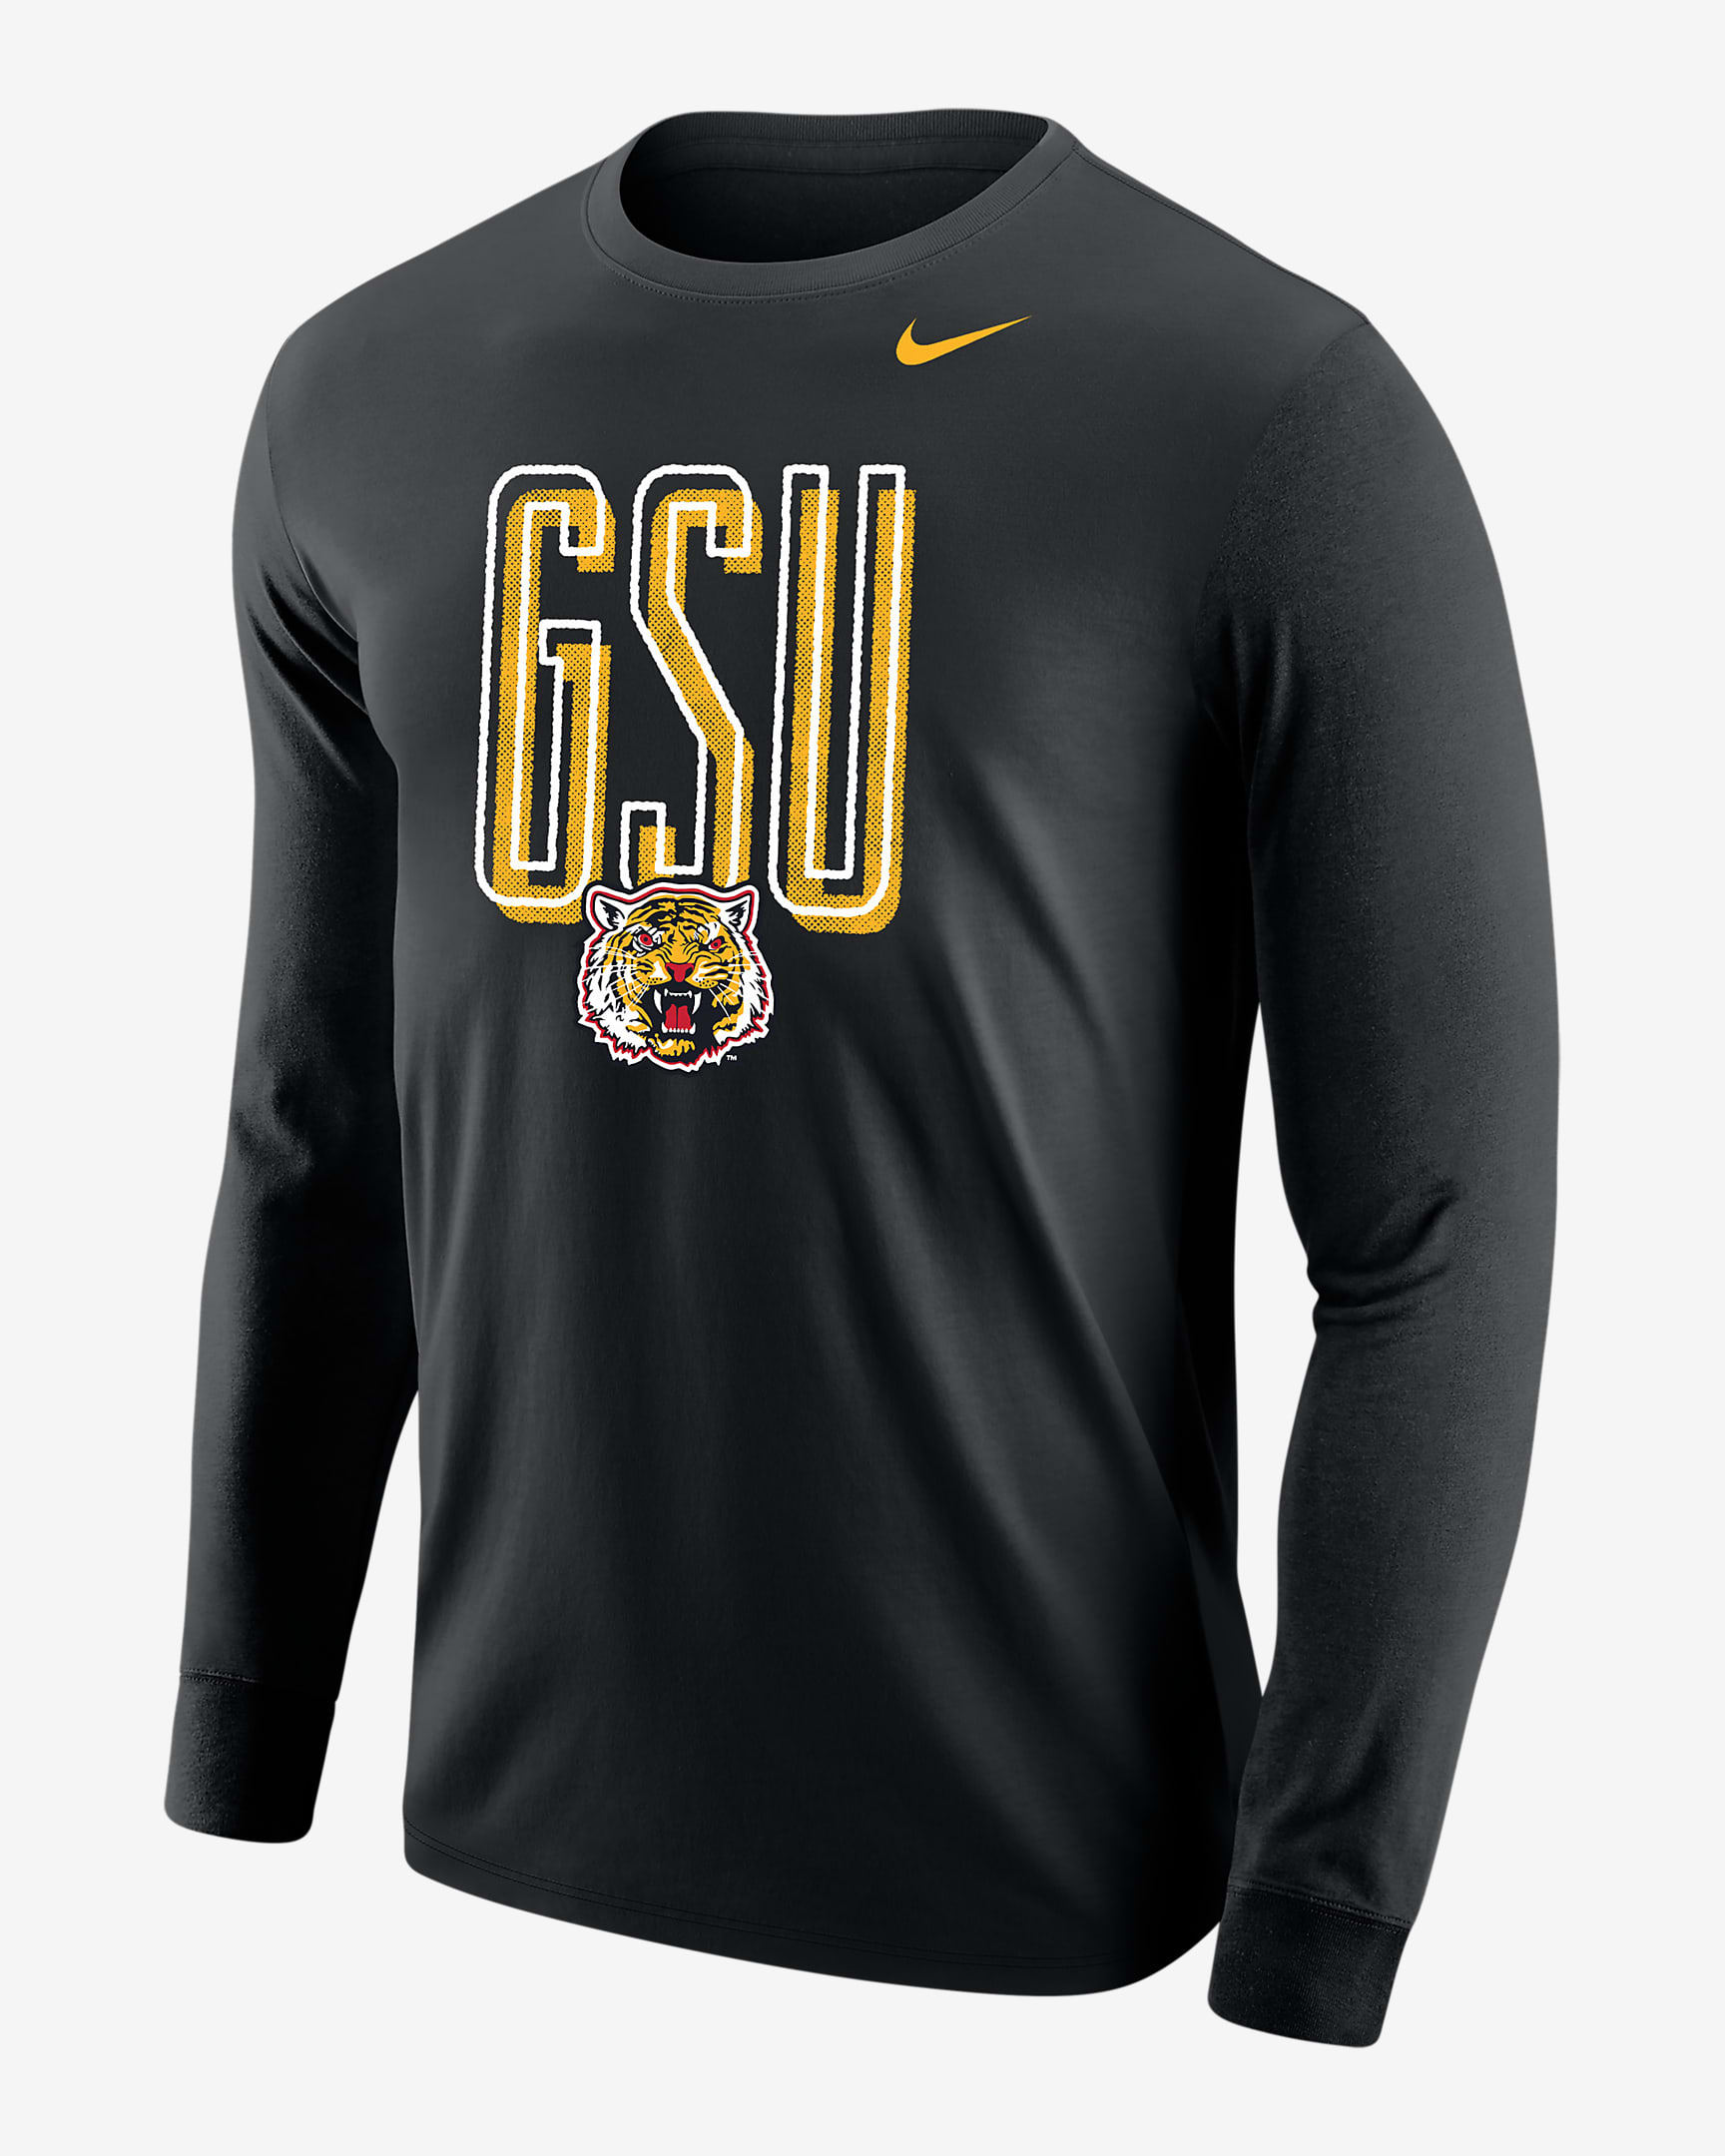 Nike College (Grambling State) Men's Long-Sleeve T-Shirt. Nike.com